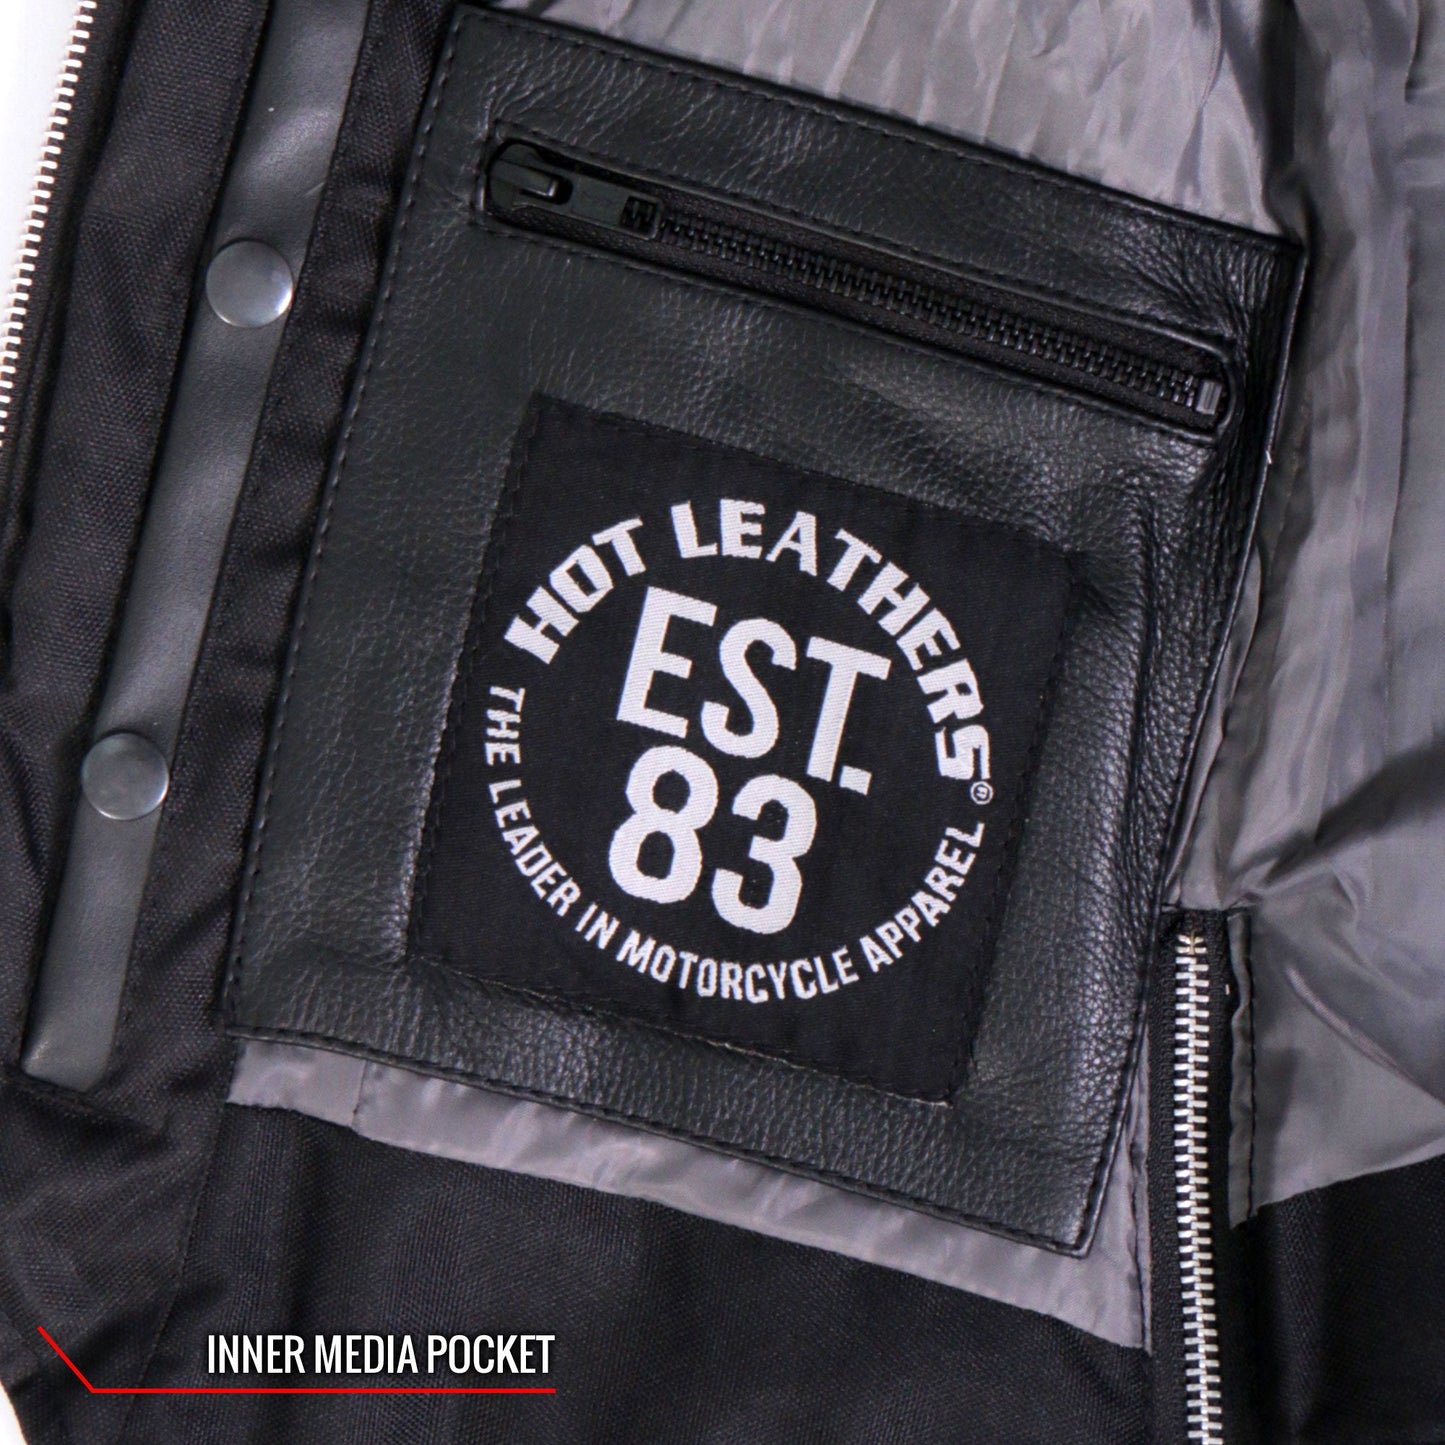 Hot Leathers VSL1016 Ladies Biker 'Rhinestone' Black Leather Motorcycle Vest